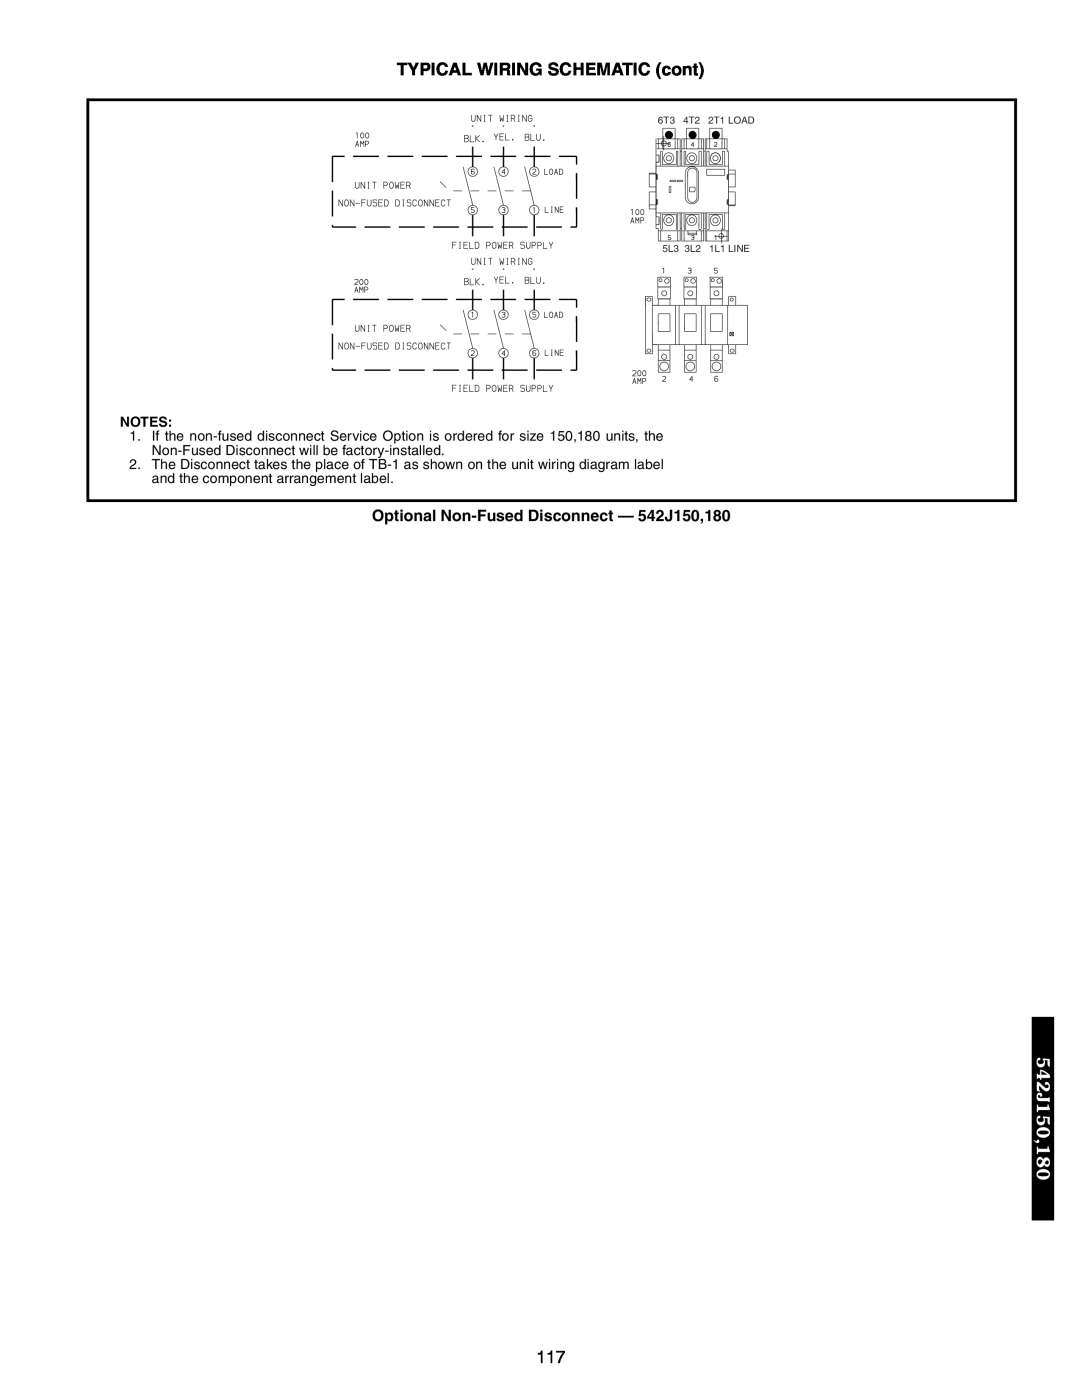 Bryant Optional Non-FusedDisconnect — 542J150,180, TYPICAL WIRING SCHEMATIC cont, 6T3 4T2 2T1 LOAD 5L3 3L2 1L1 LINE 